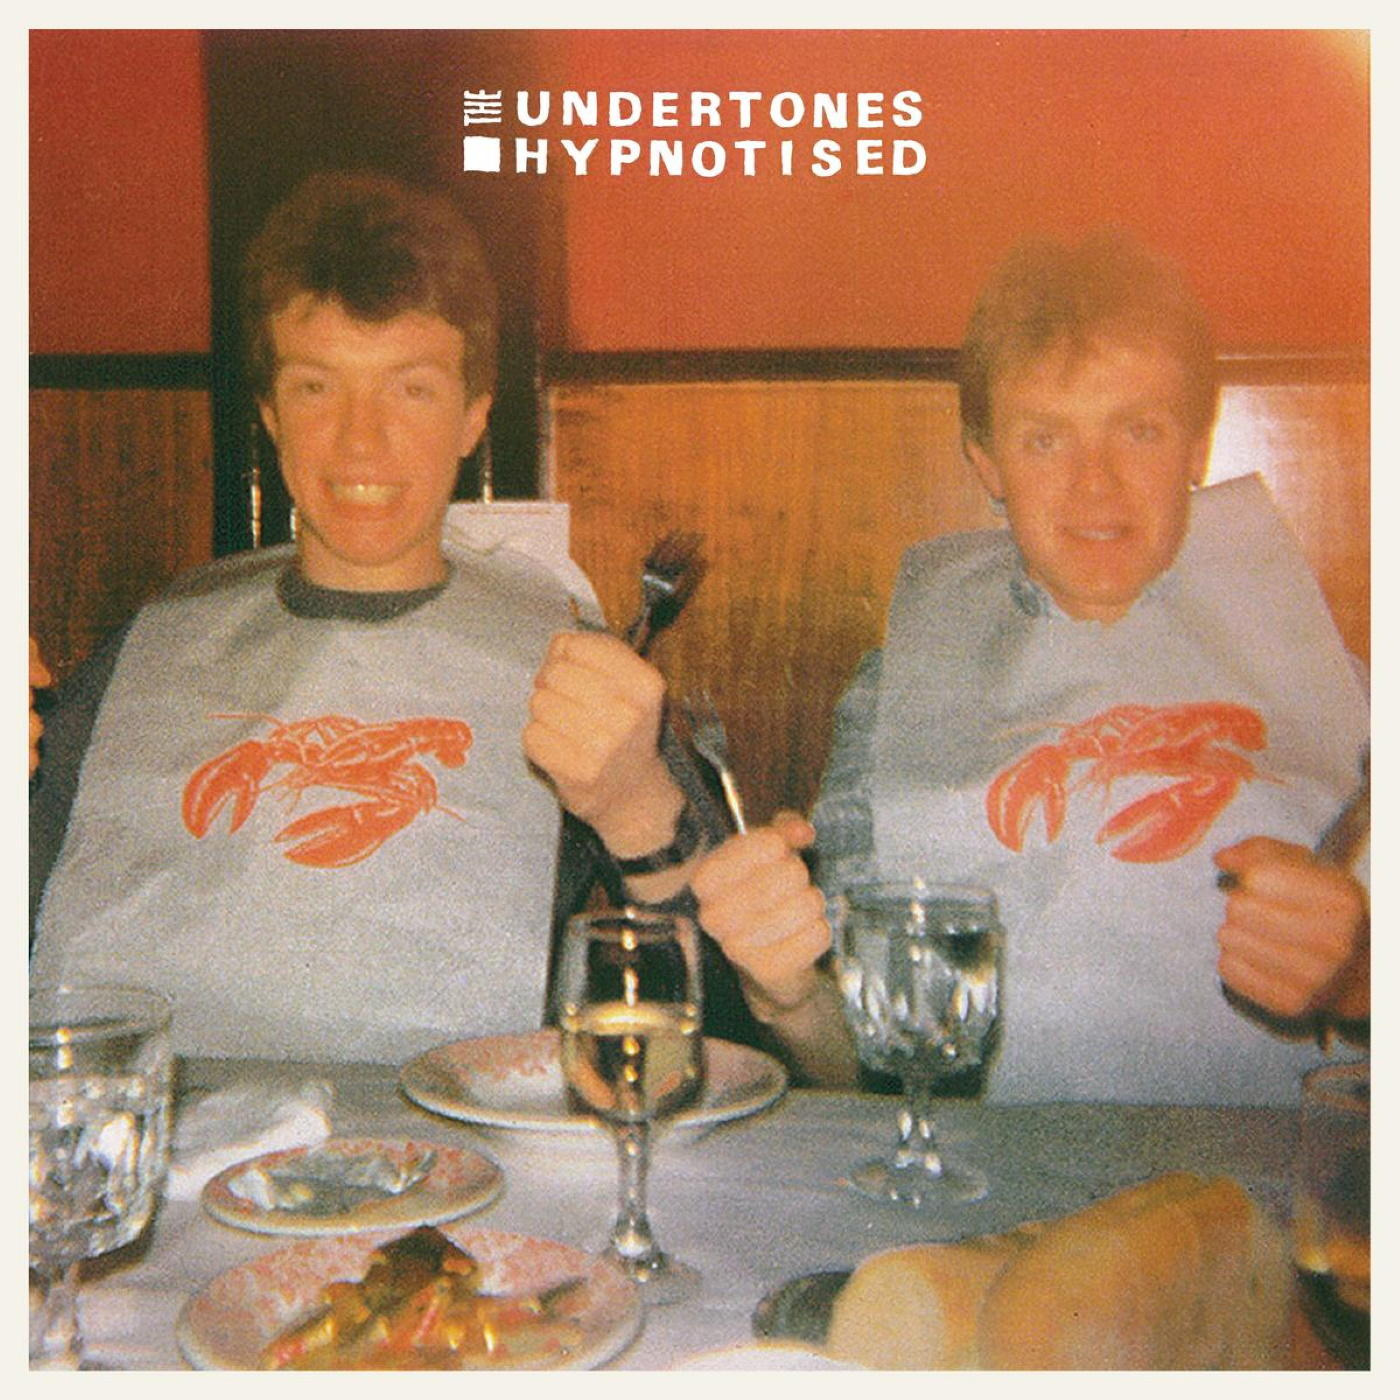 The Undertones - Hypnotised (Vinyl) - Vinyl) (Red